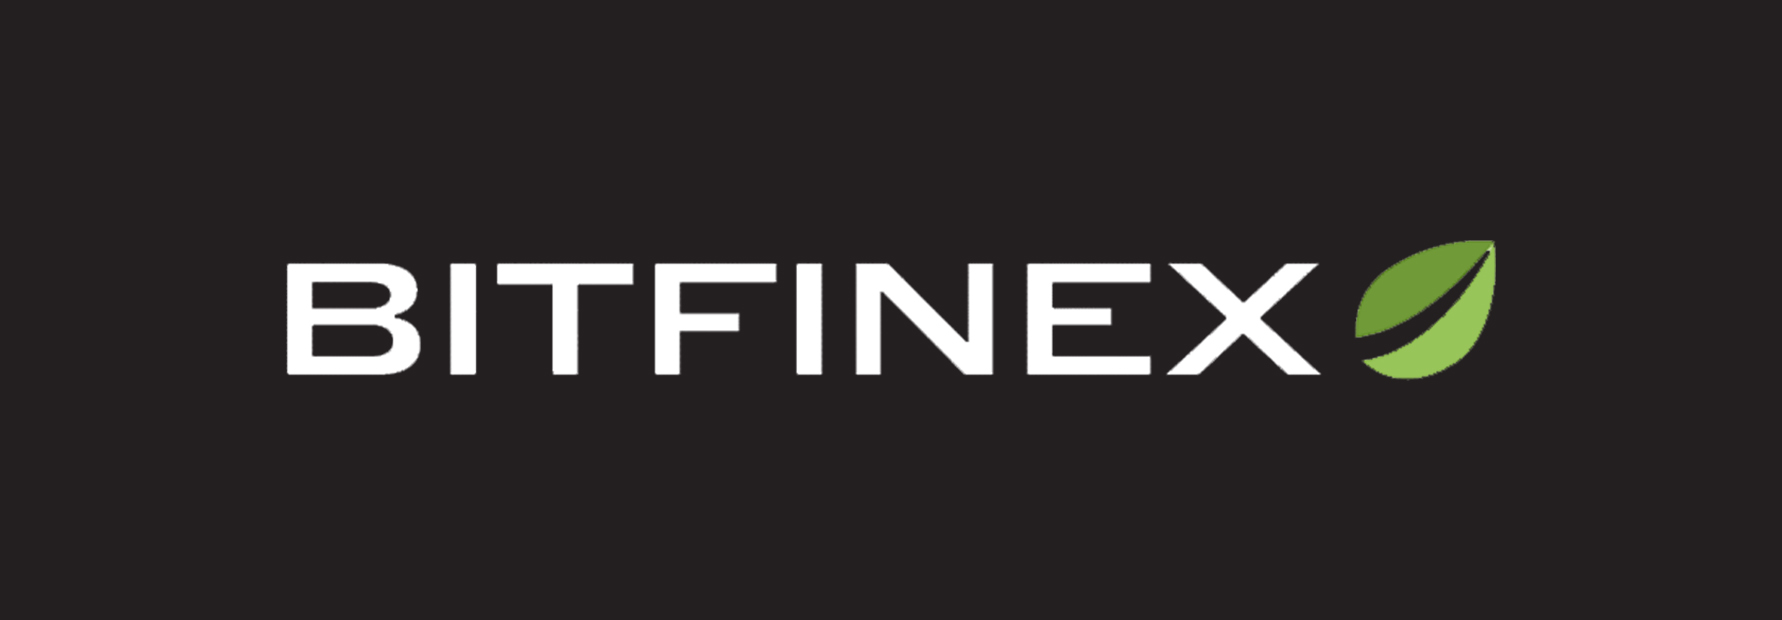 bitfinex-logo.jpg